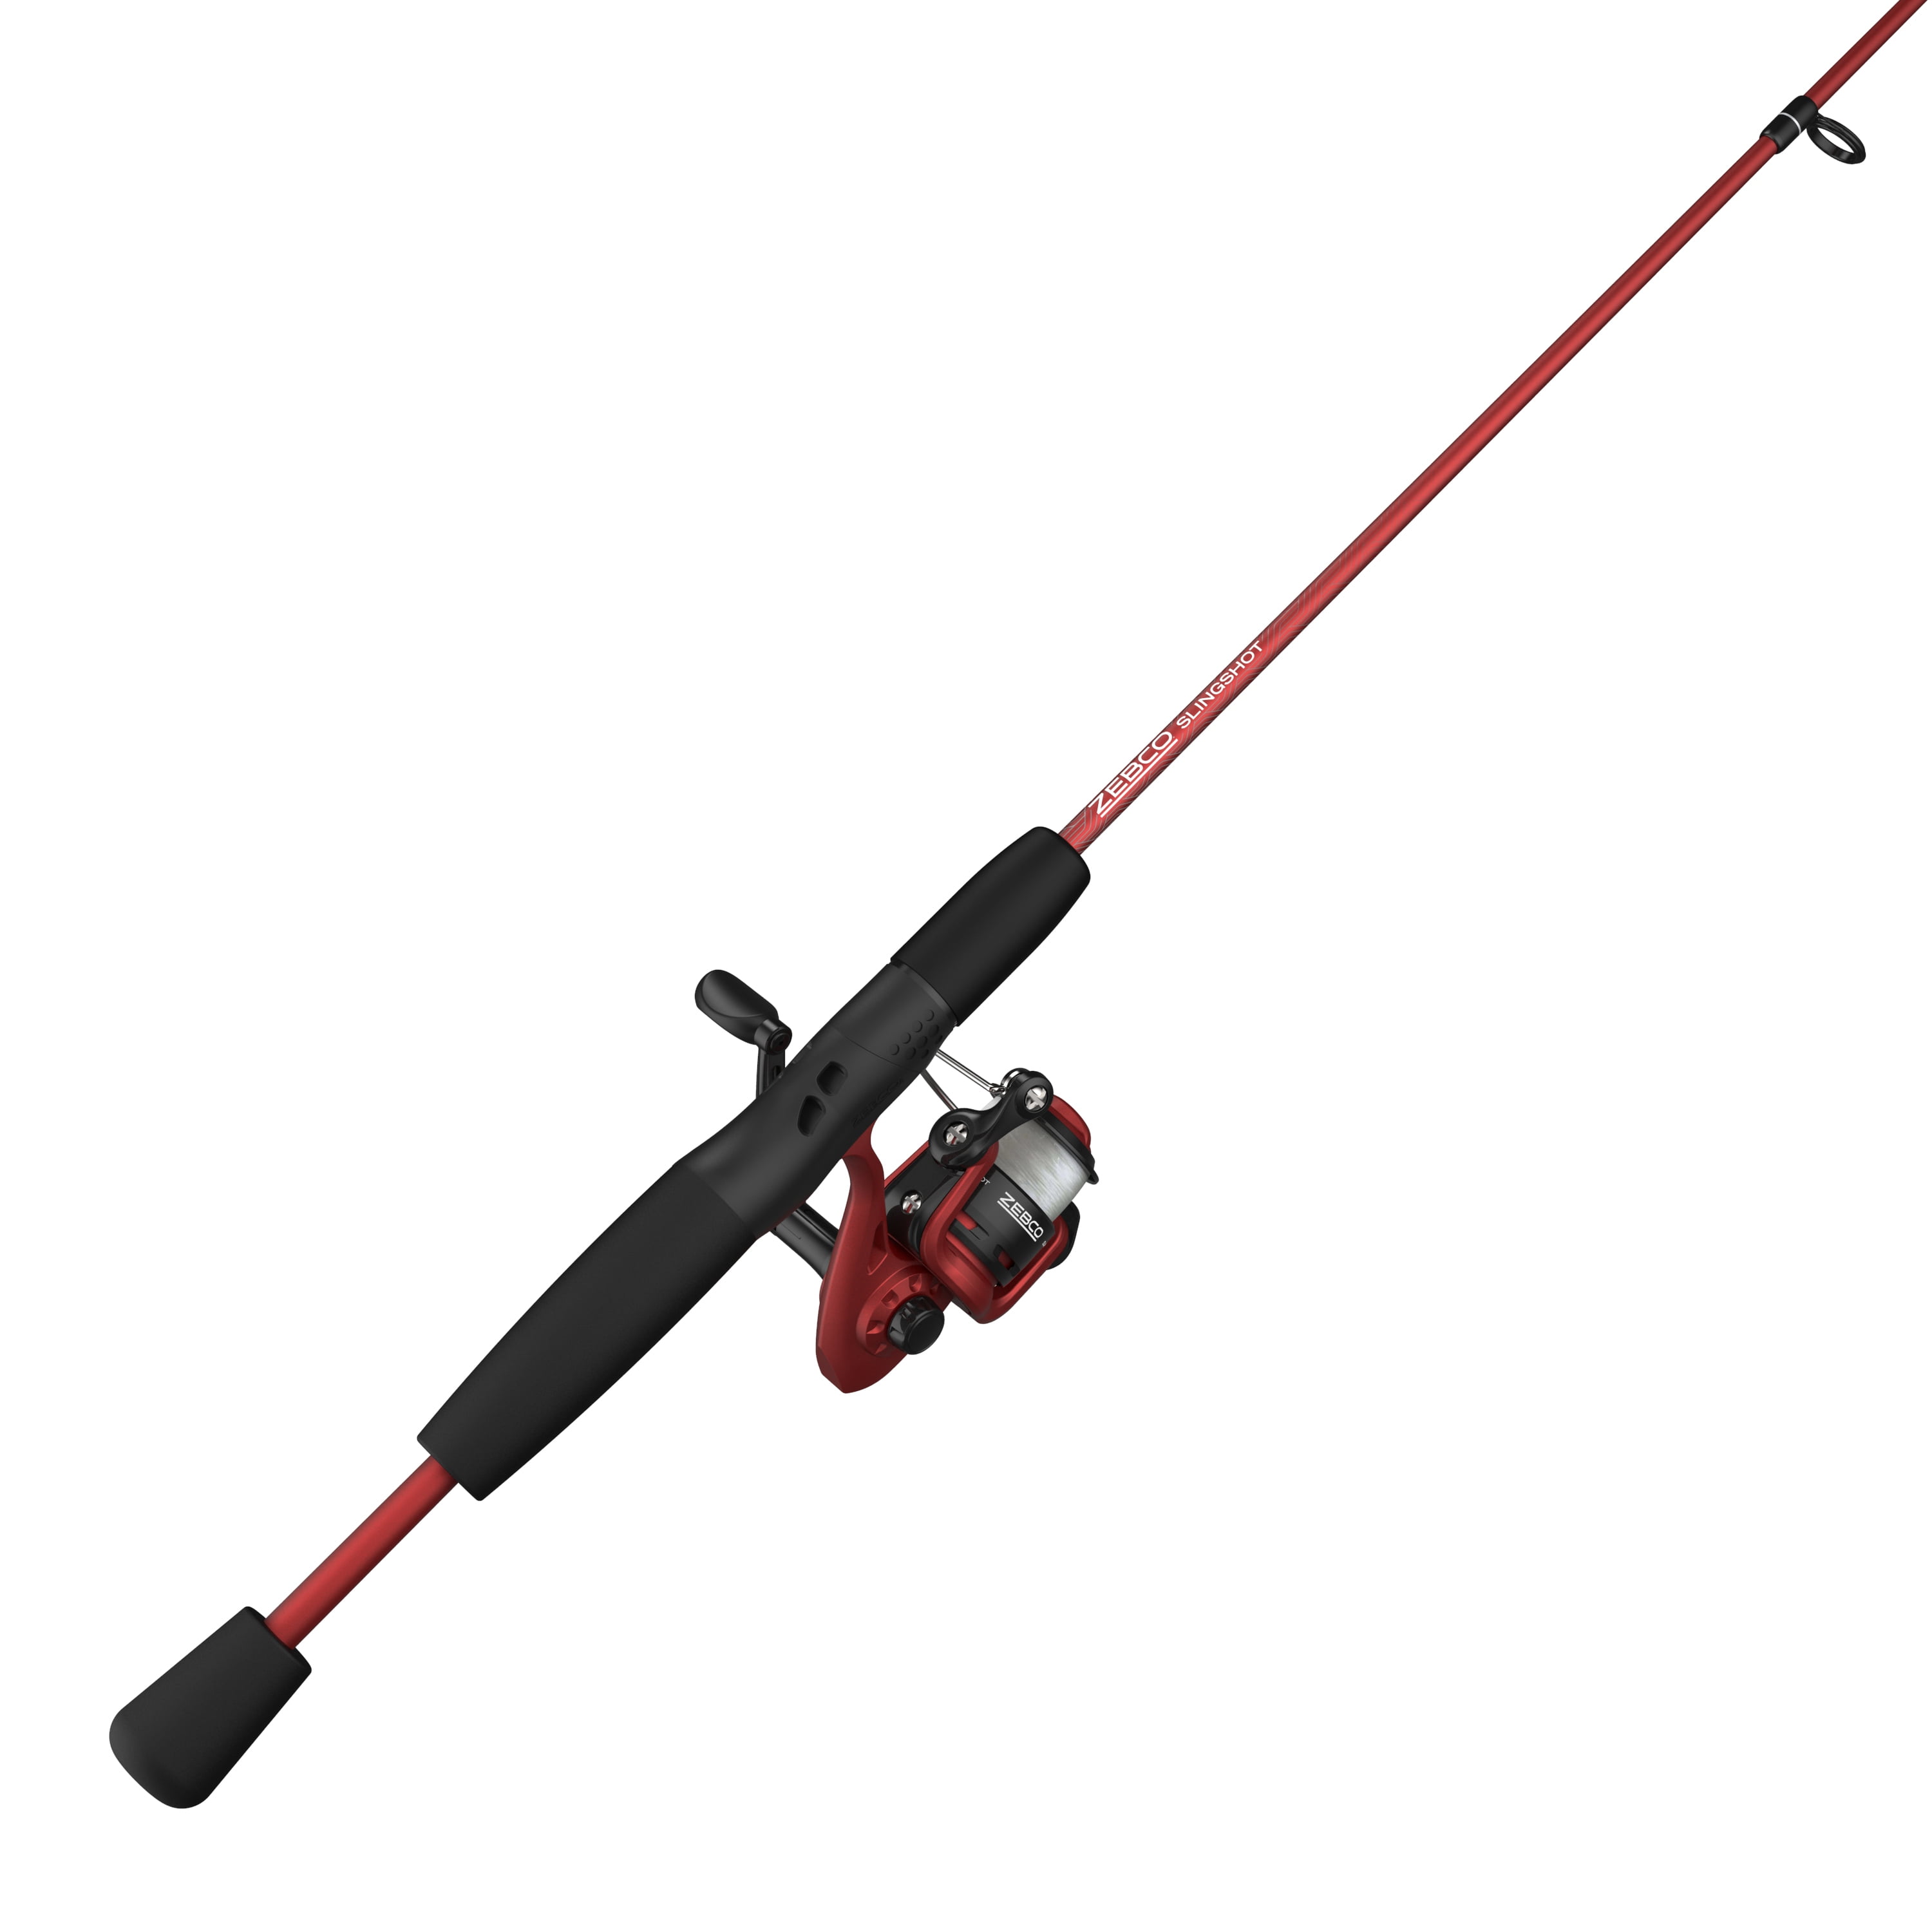 Reviews for Red 5 ft. 6 in. Fiberglass Fishing Rod, Reel Combo